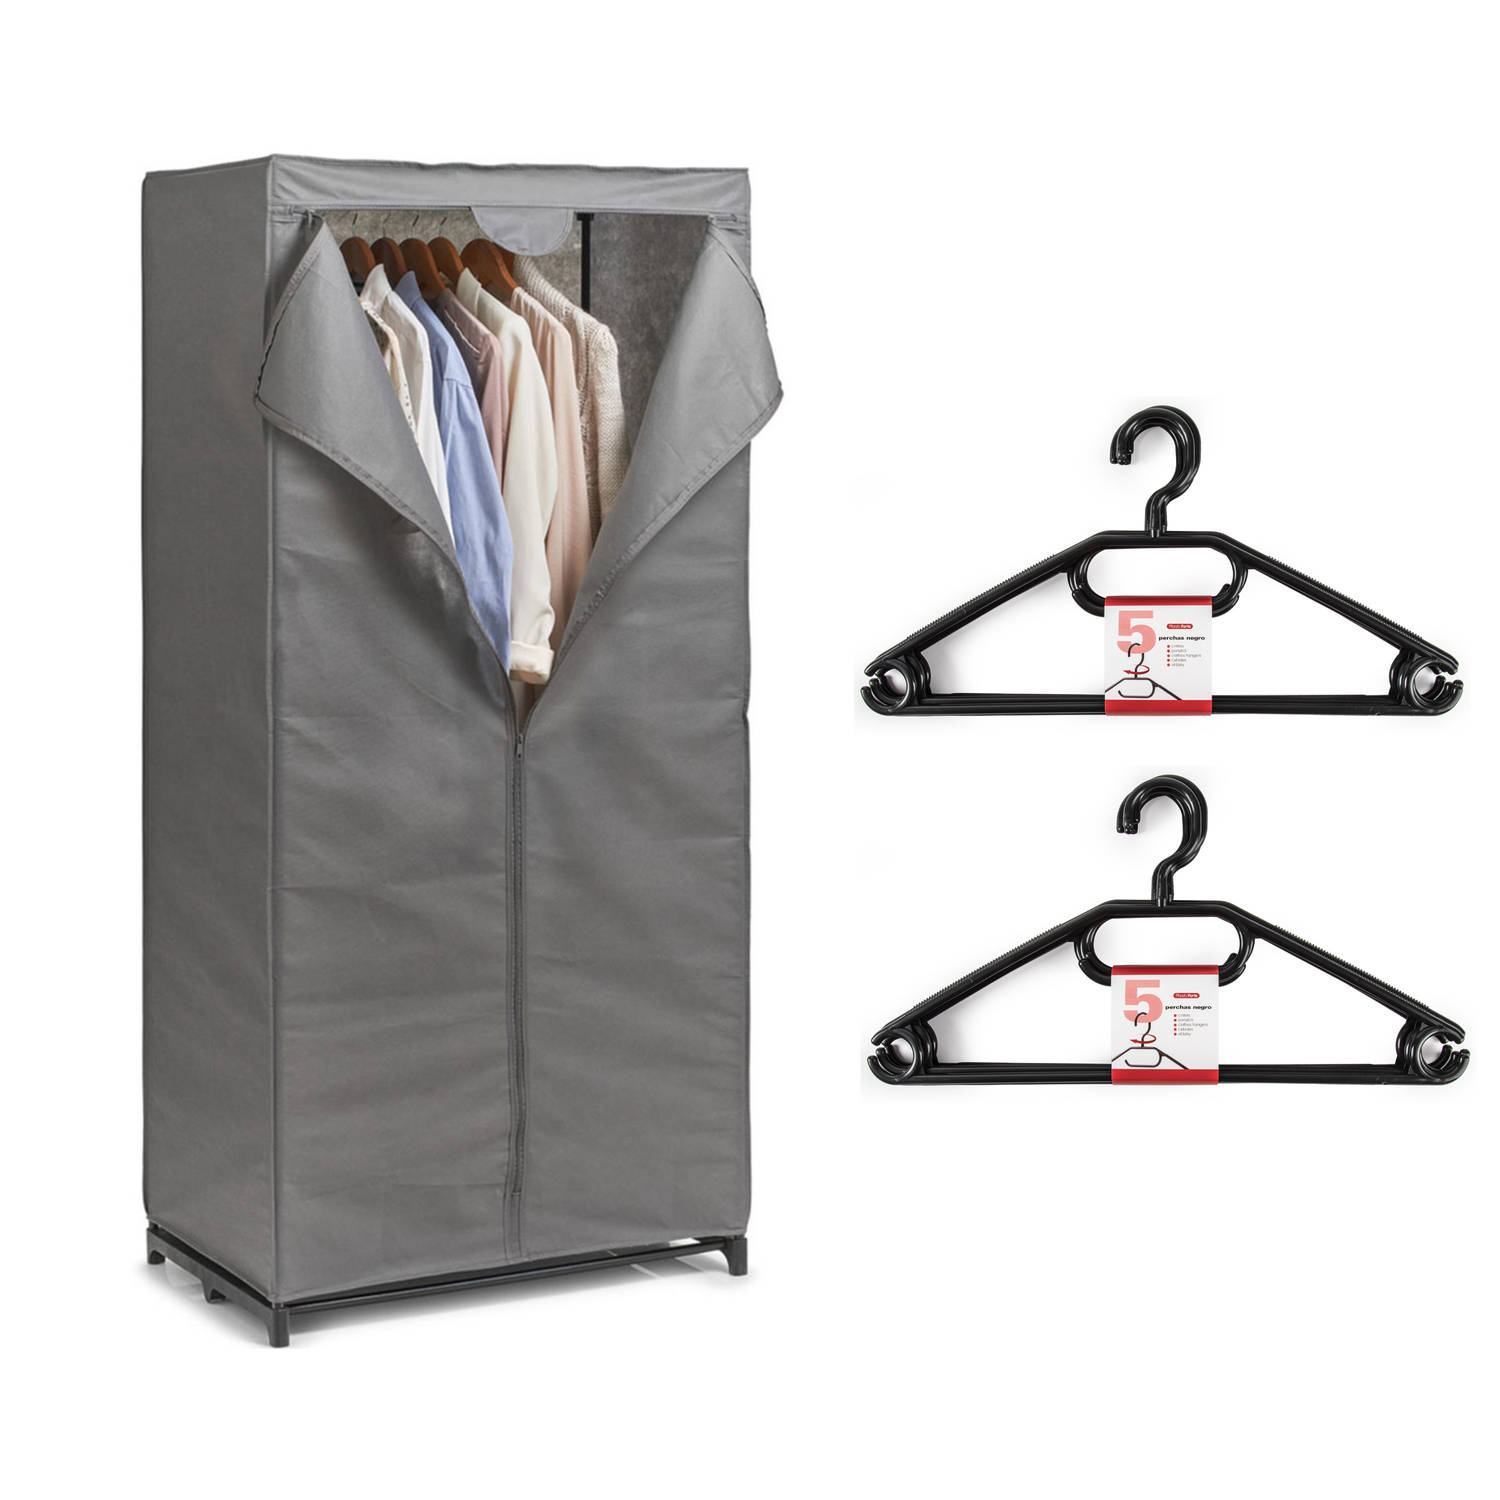 Mobiele kledingkast met kleding hangers - enkele stang - kunststof - grijs - 50 x 160 x 75 cm - Campingkledingkasten